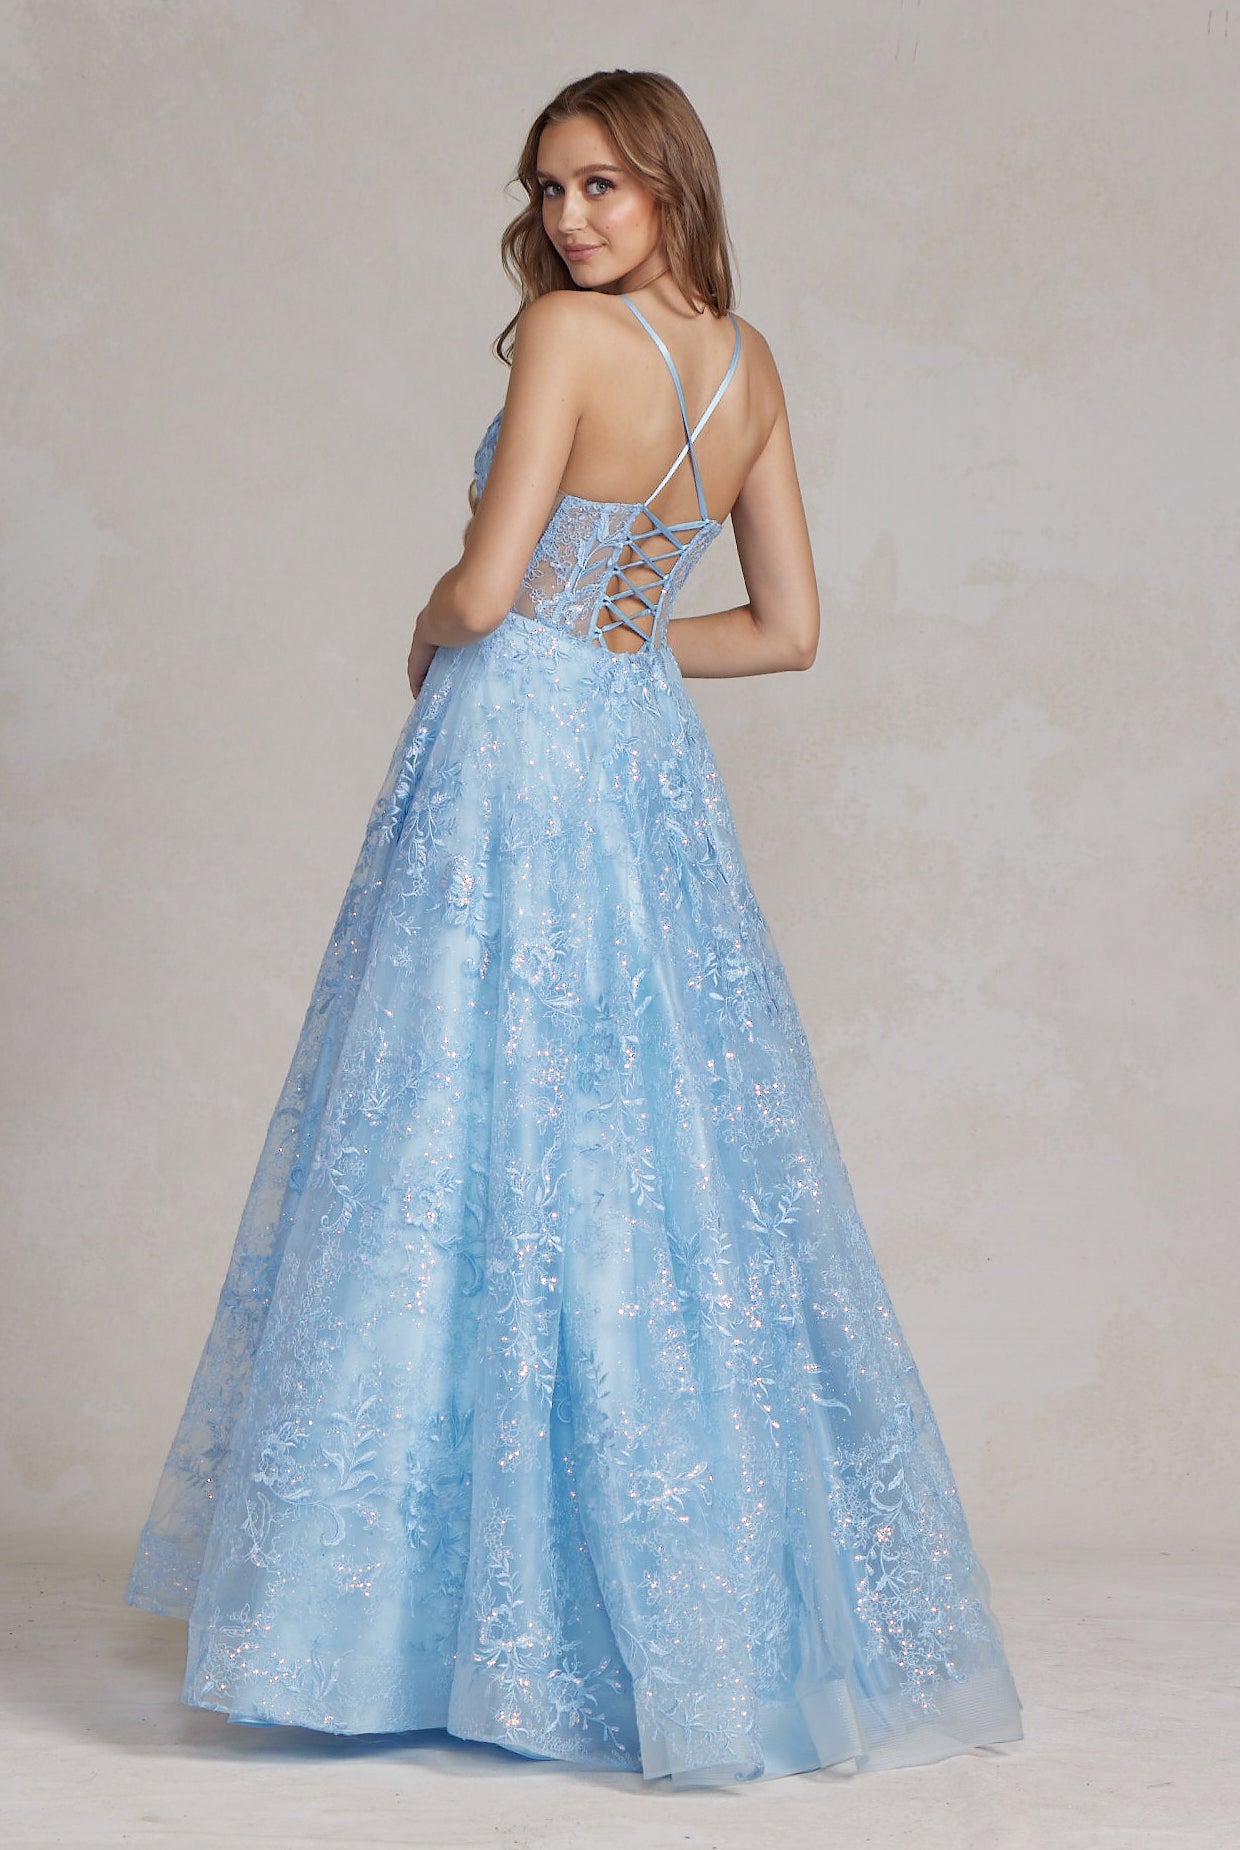 Sheer Lace Spaghetti Straps Crystal-Embellished Waistband Long Prom Dress NXC1118-Prom Dress-smcfashion.com